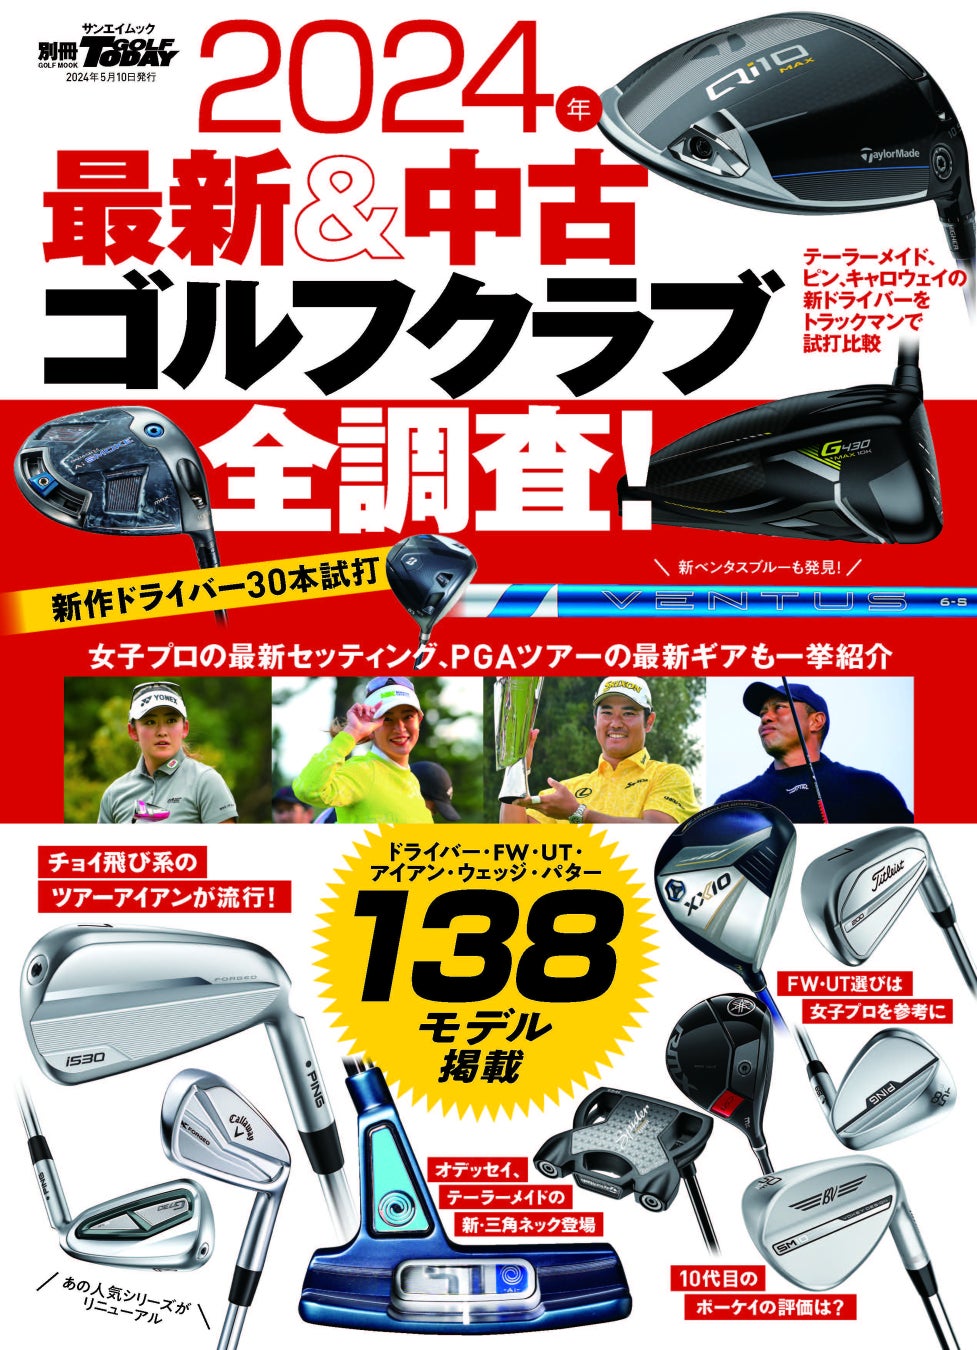 BARBARIAN RUGBY WEAR × SHIZUOKA BlueRevs第二弾コラボレーション商品販売のお知らせ